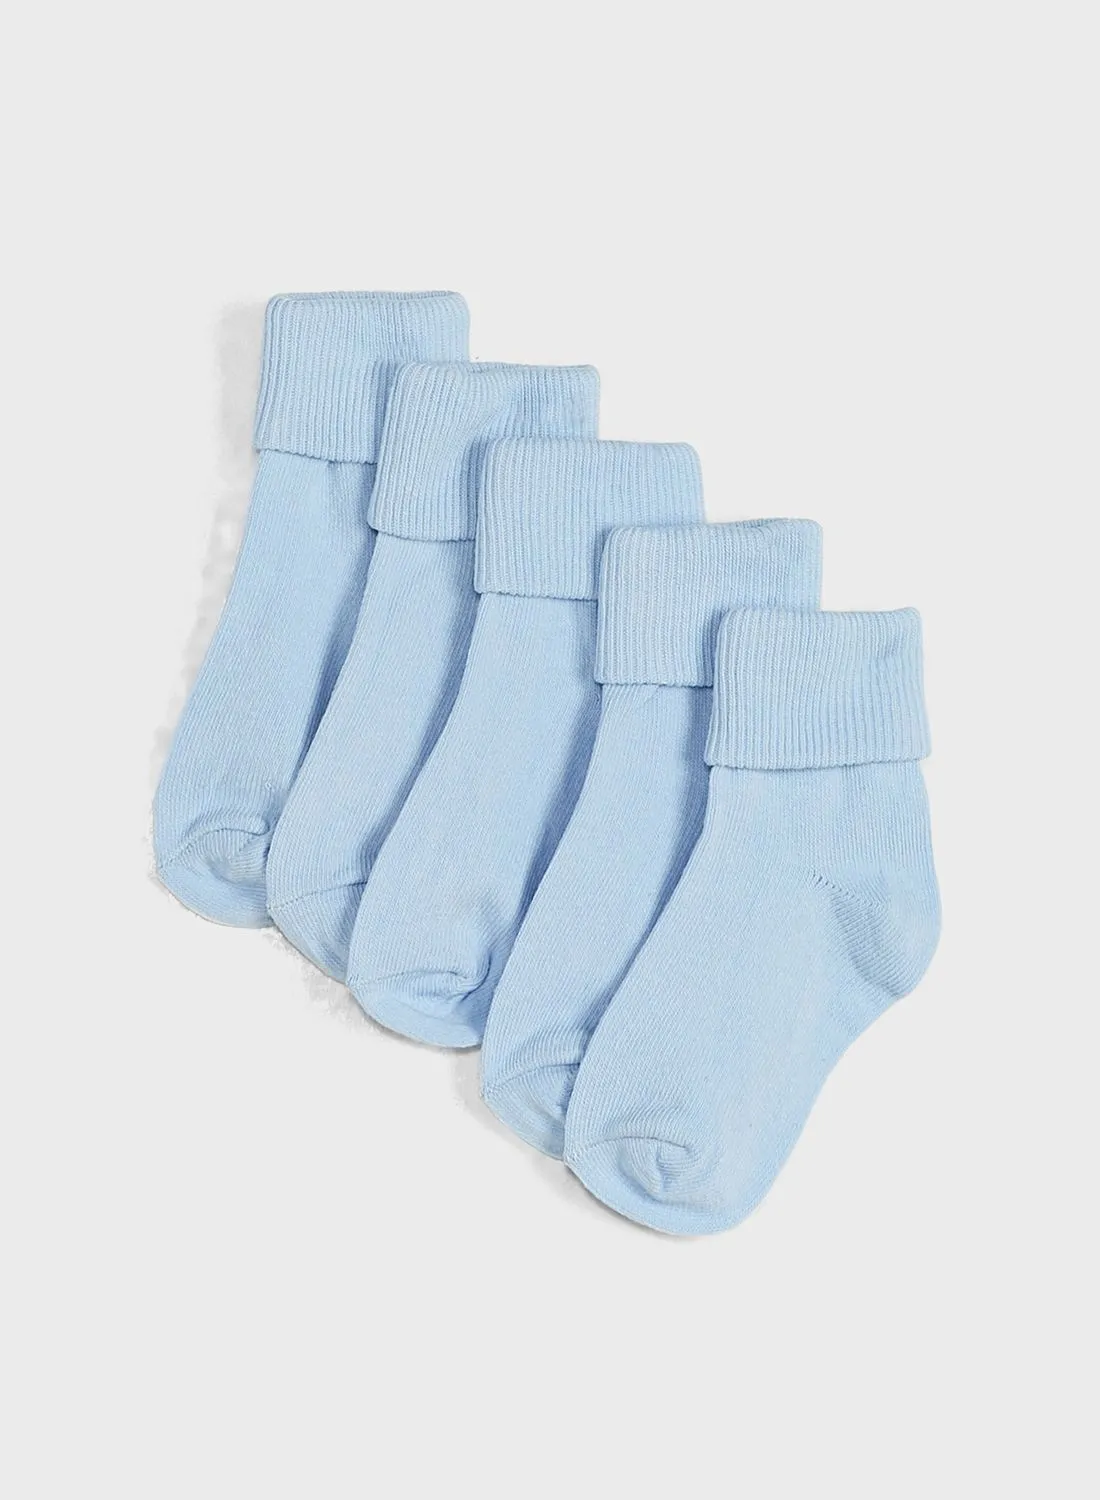 mothercare Infant 5 Pack Assorted Socks